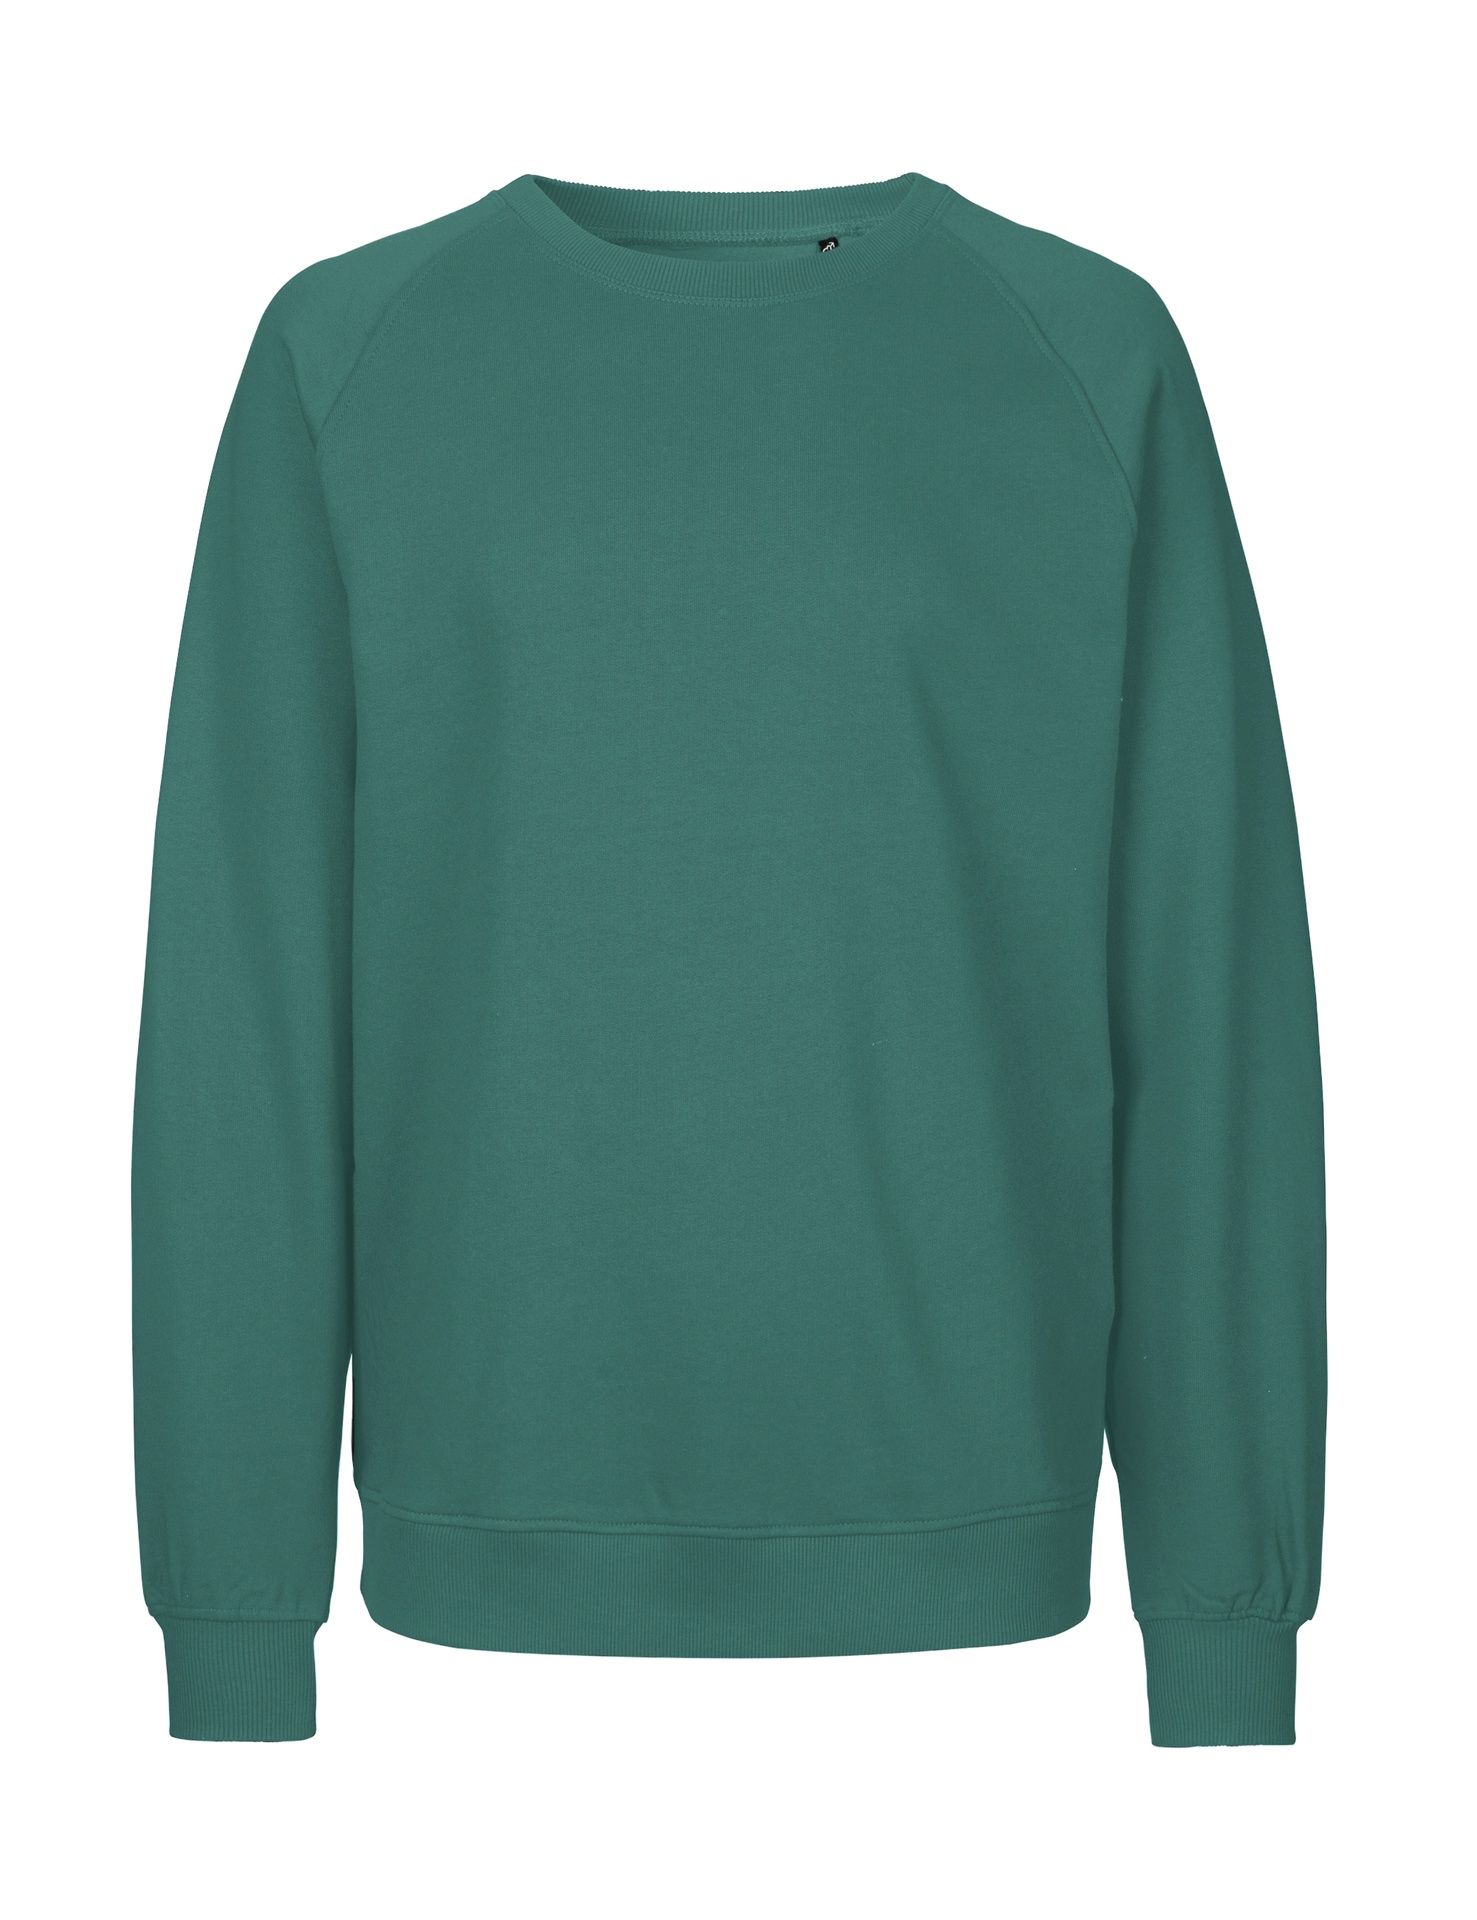 [PR/02870] Unisex Sweatshirt (Teal 52, M)